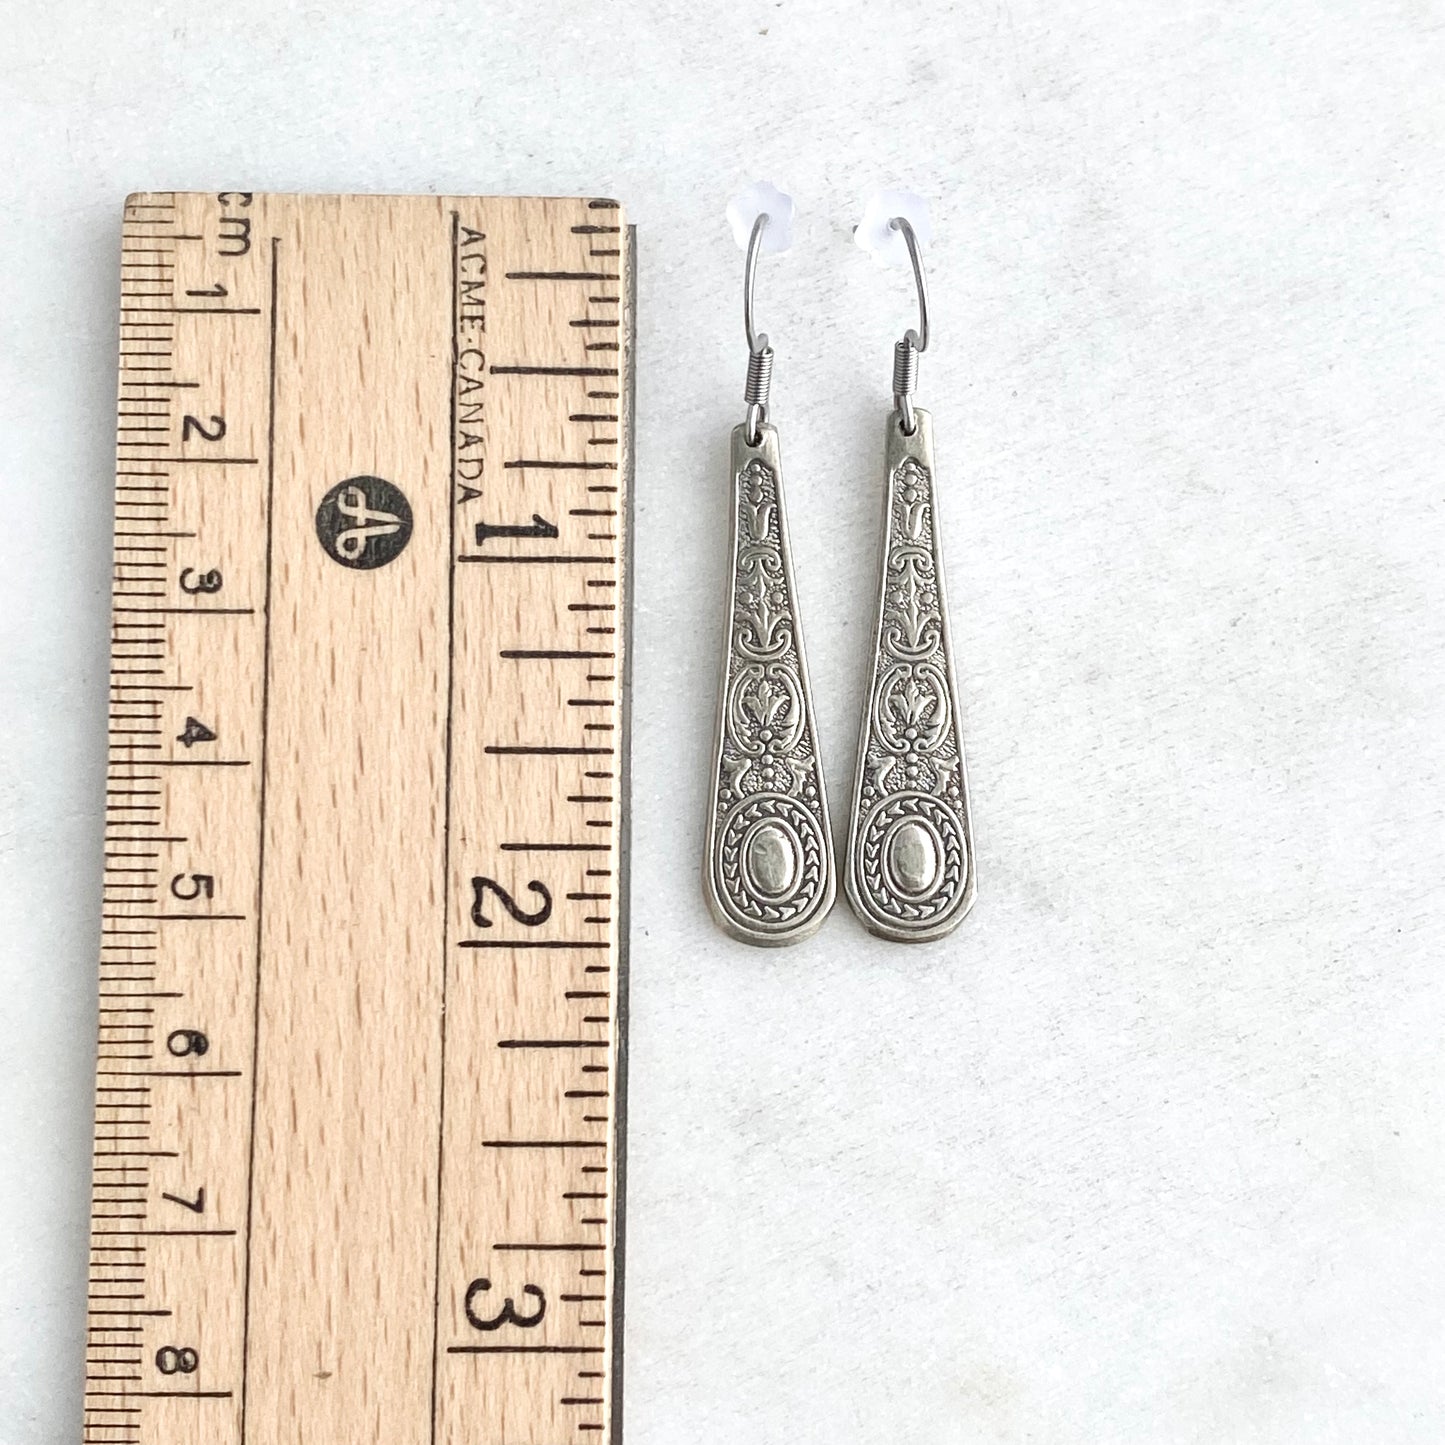 Sugar Tong Drop Earrings, Reclaimed Silverware Earrings, Vintage Spoon Jewelry Earrings callistafaye   